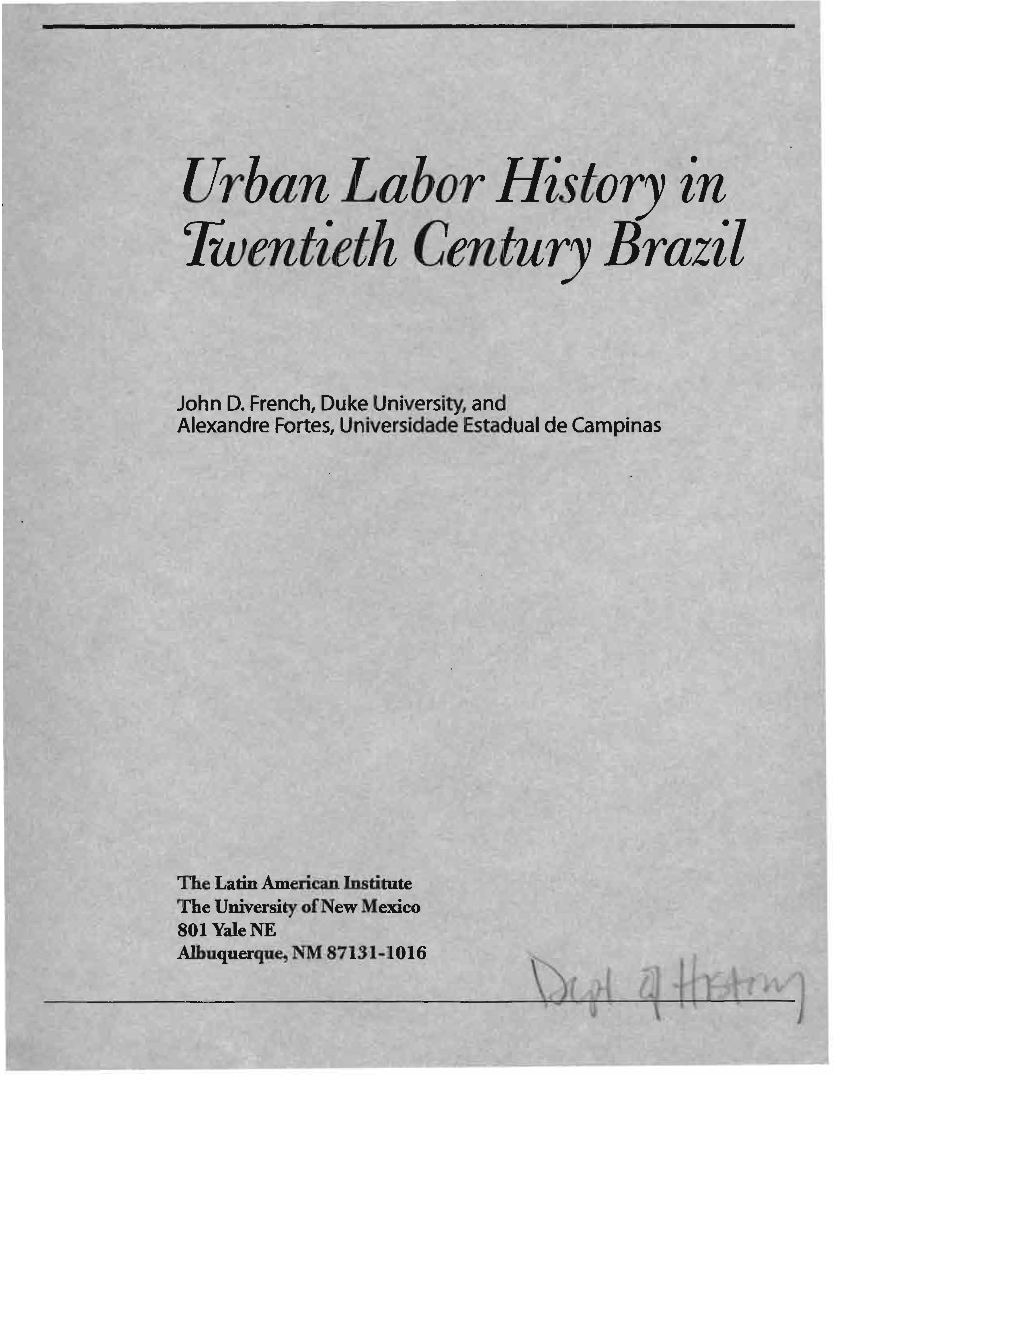 Urban Labor History in Twentieth Centurybrazil French and Fortes